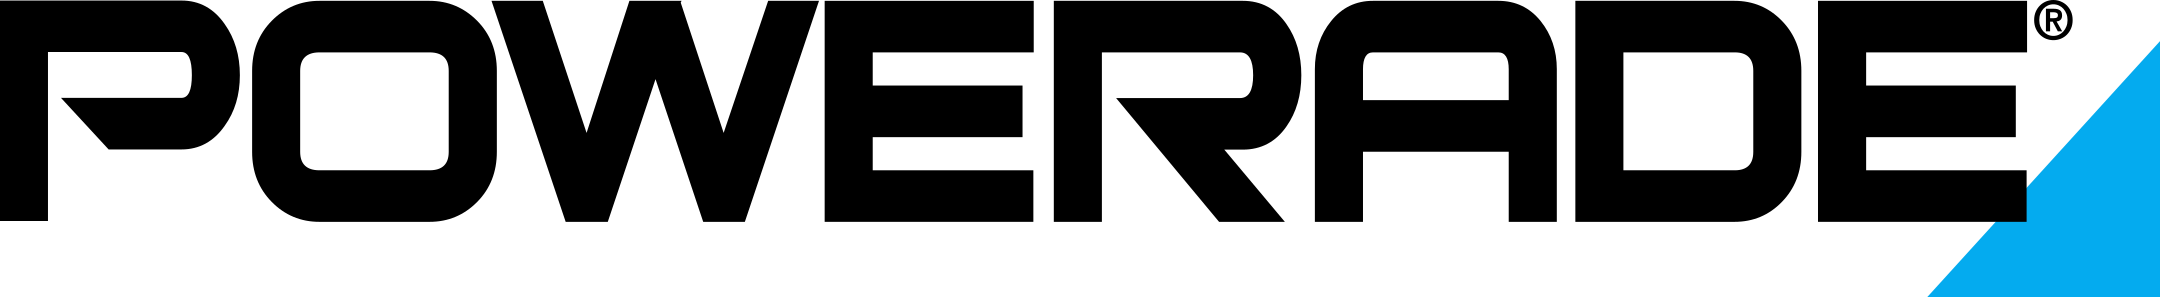 powerade logo 3 - Powerade Logo